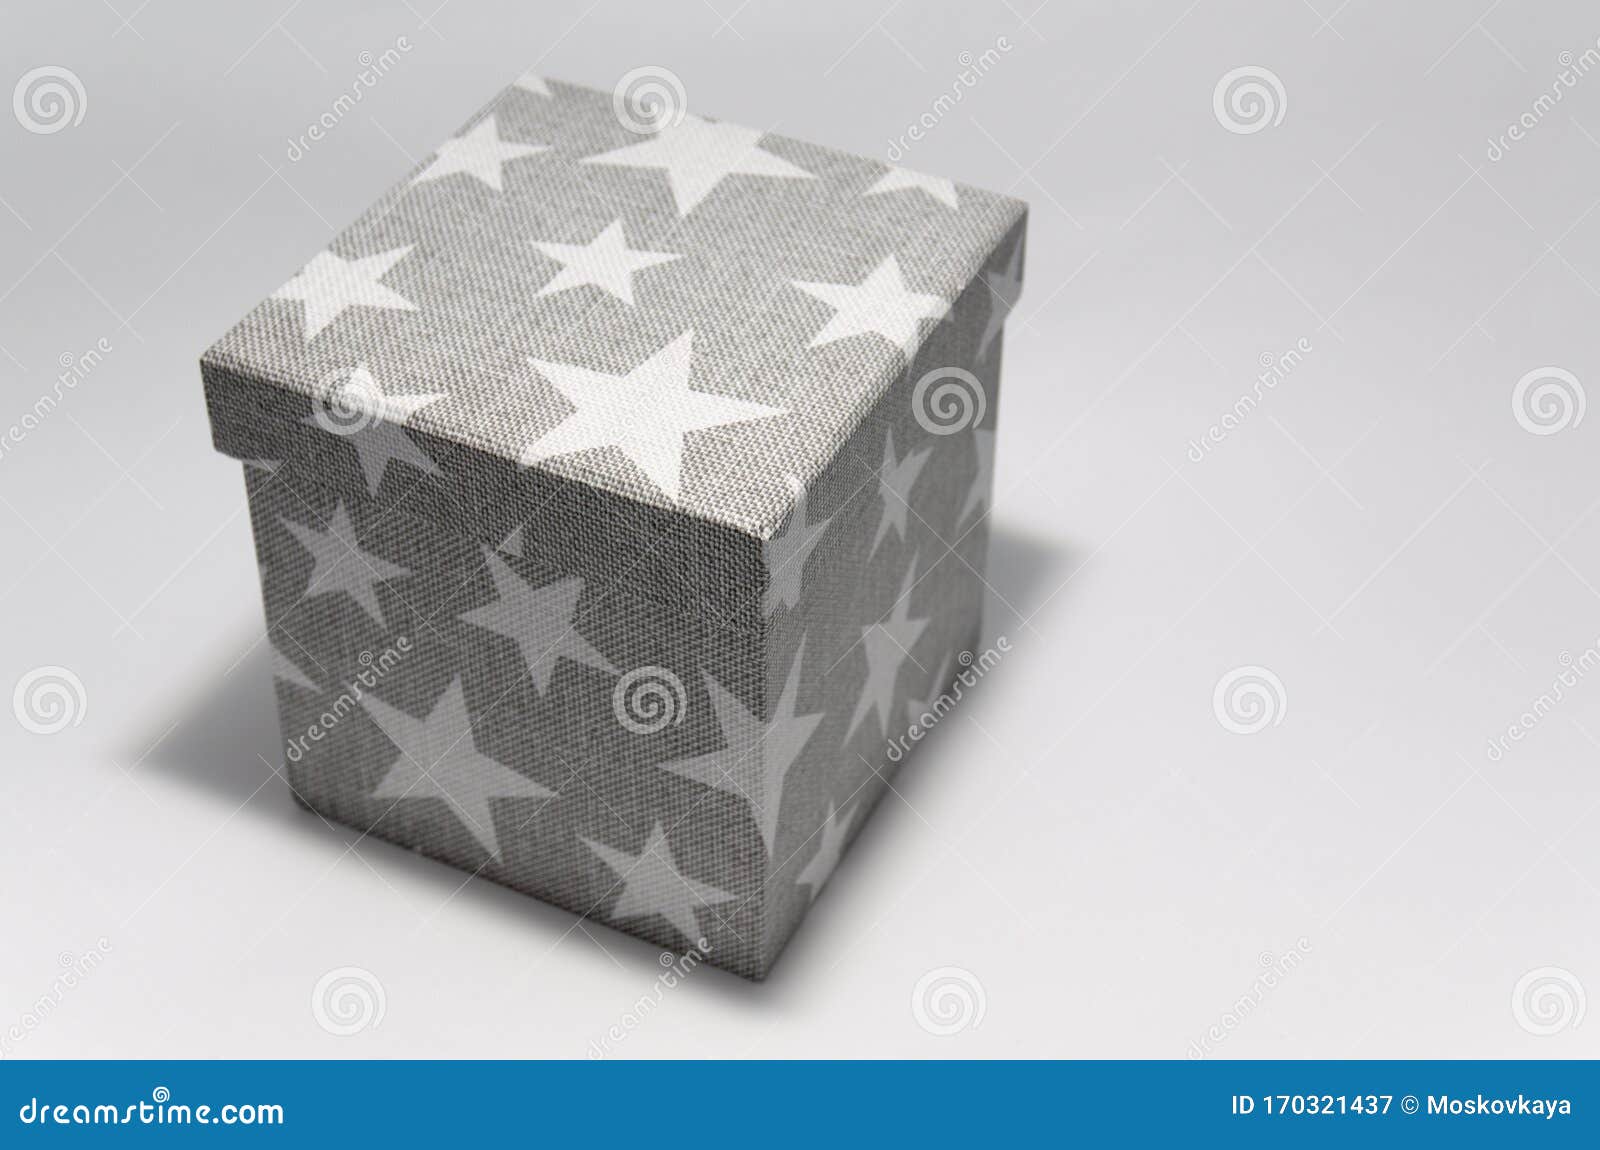 Caja Cartón Gris Cúbico Decorada Con Estrellas Blancas De Cambios Imagen de - Imagen de yourself: 170321437